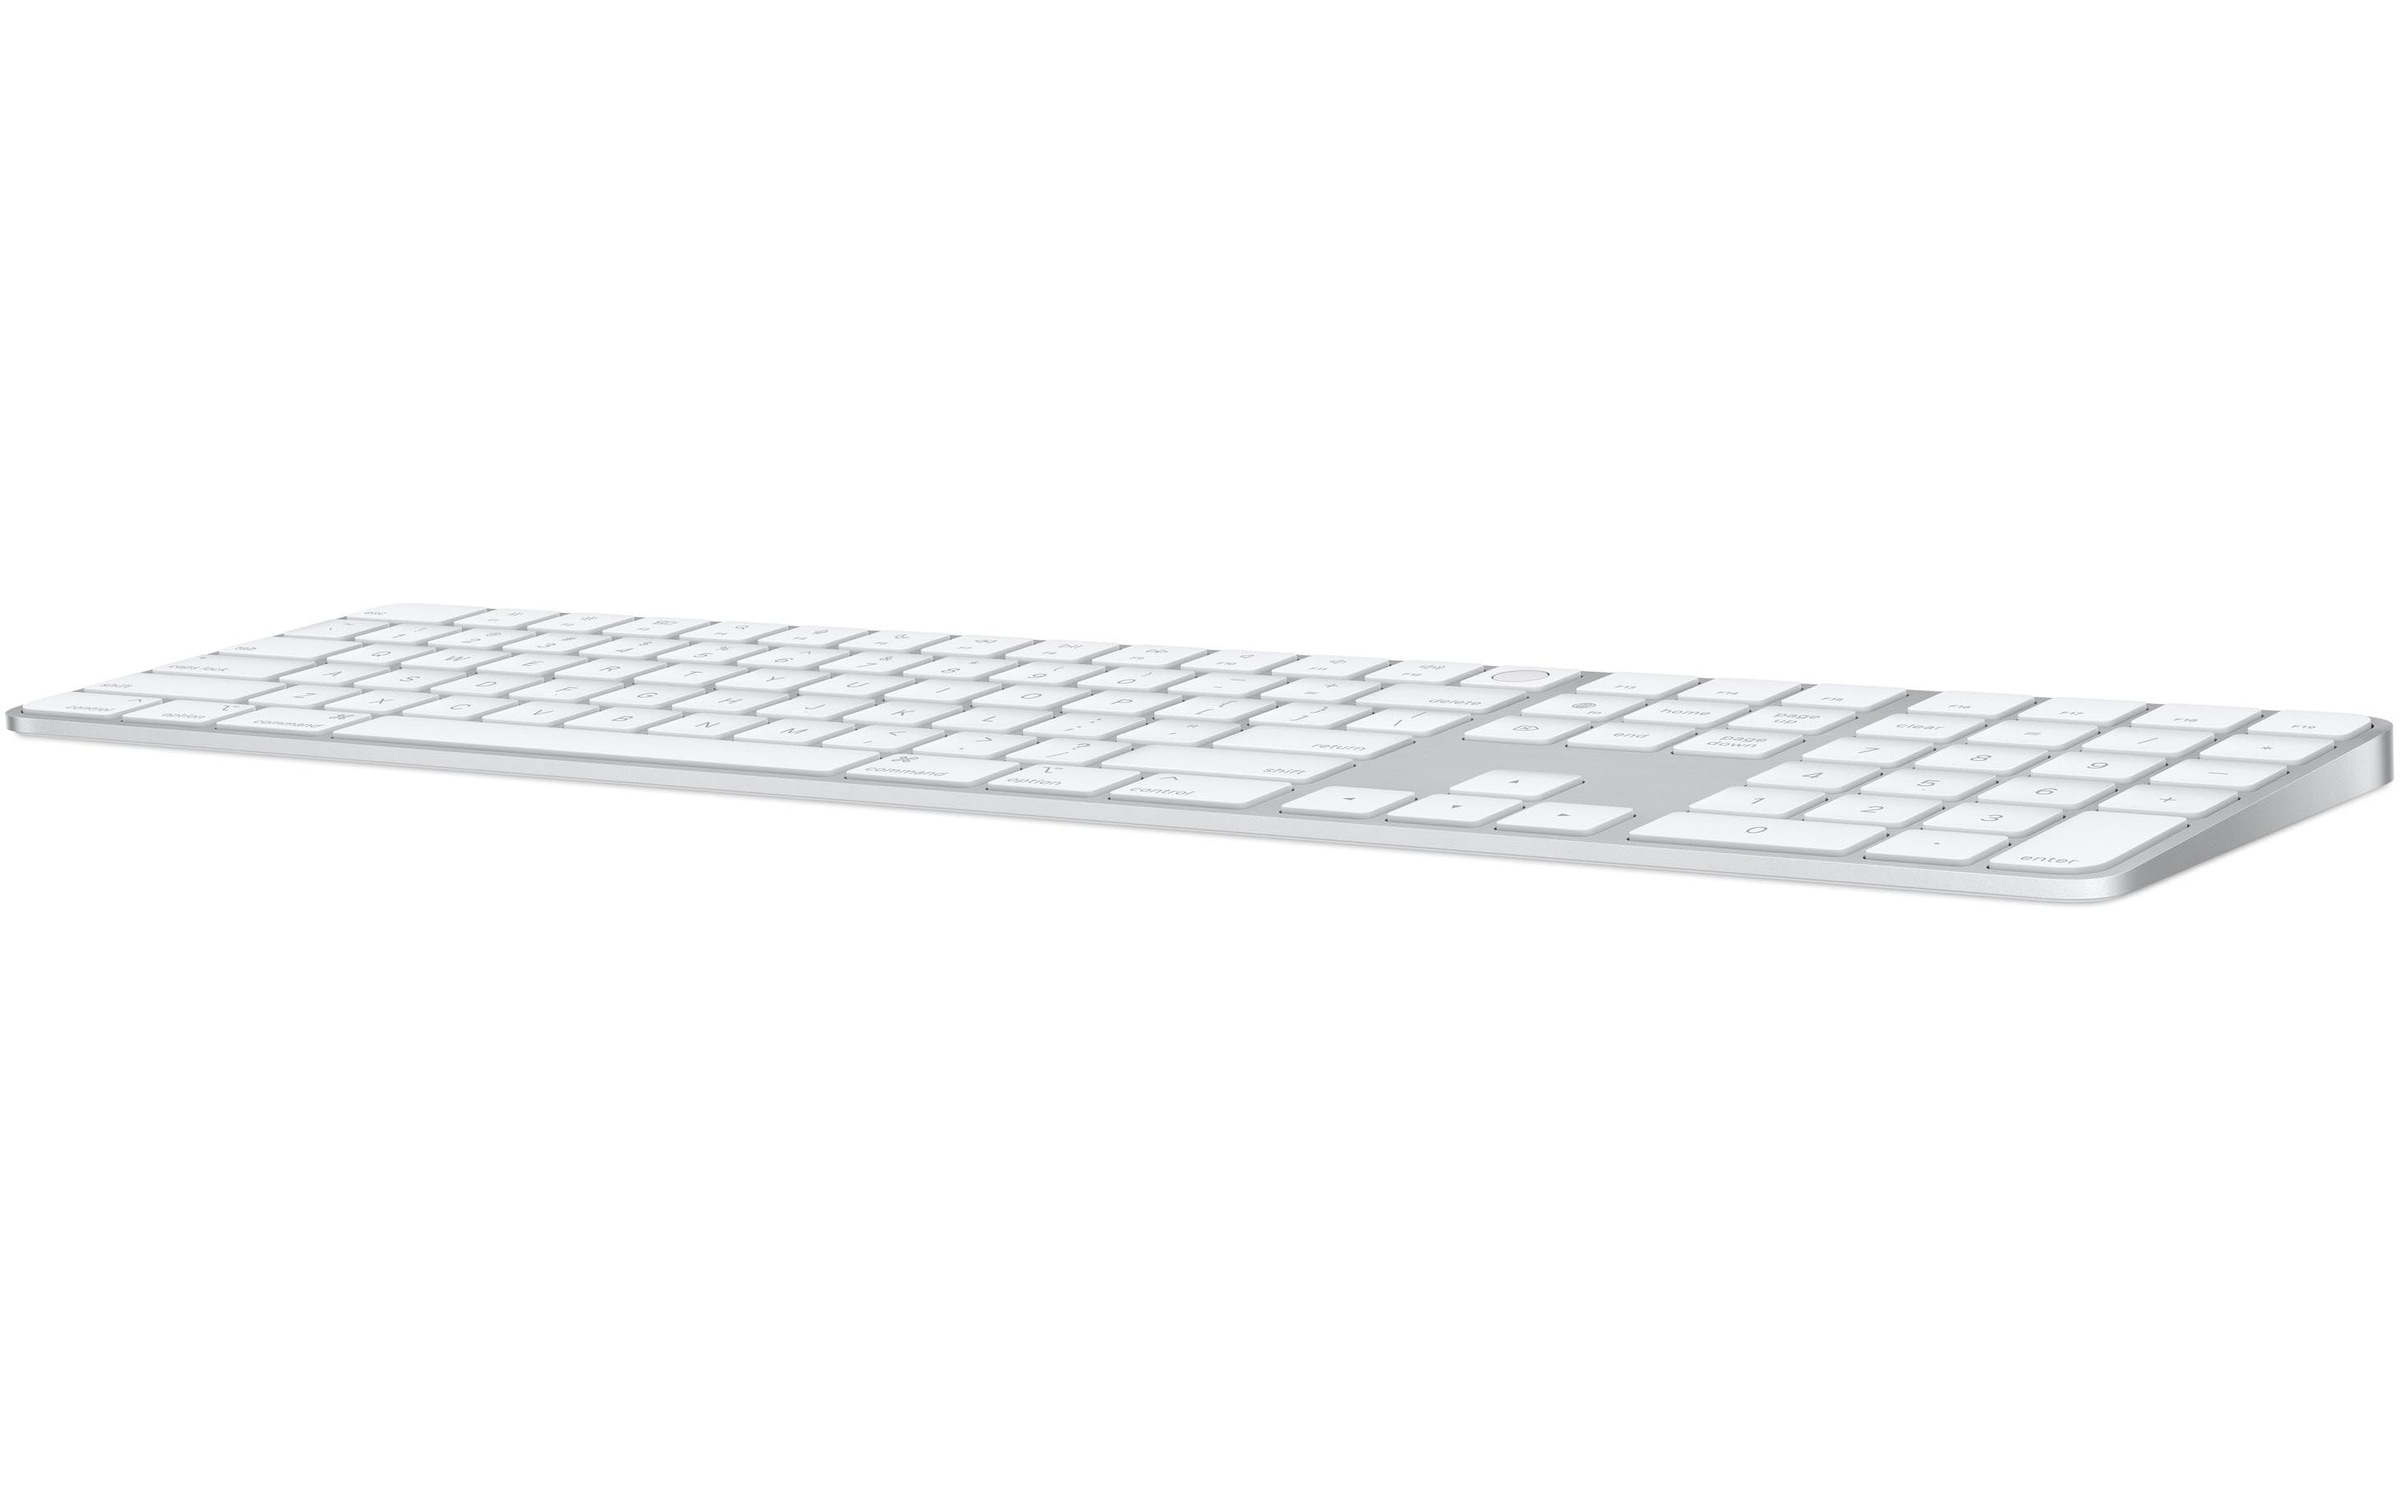 Apple Apple-Tastatur »Magic mit Ziffernblo«